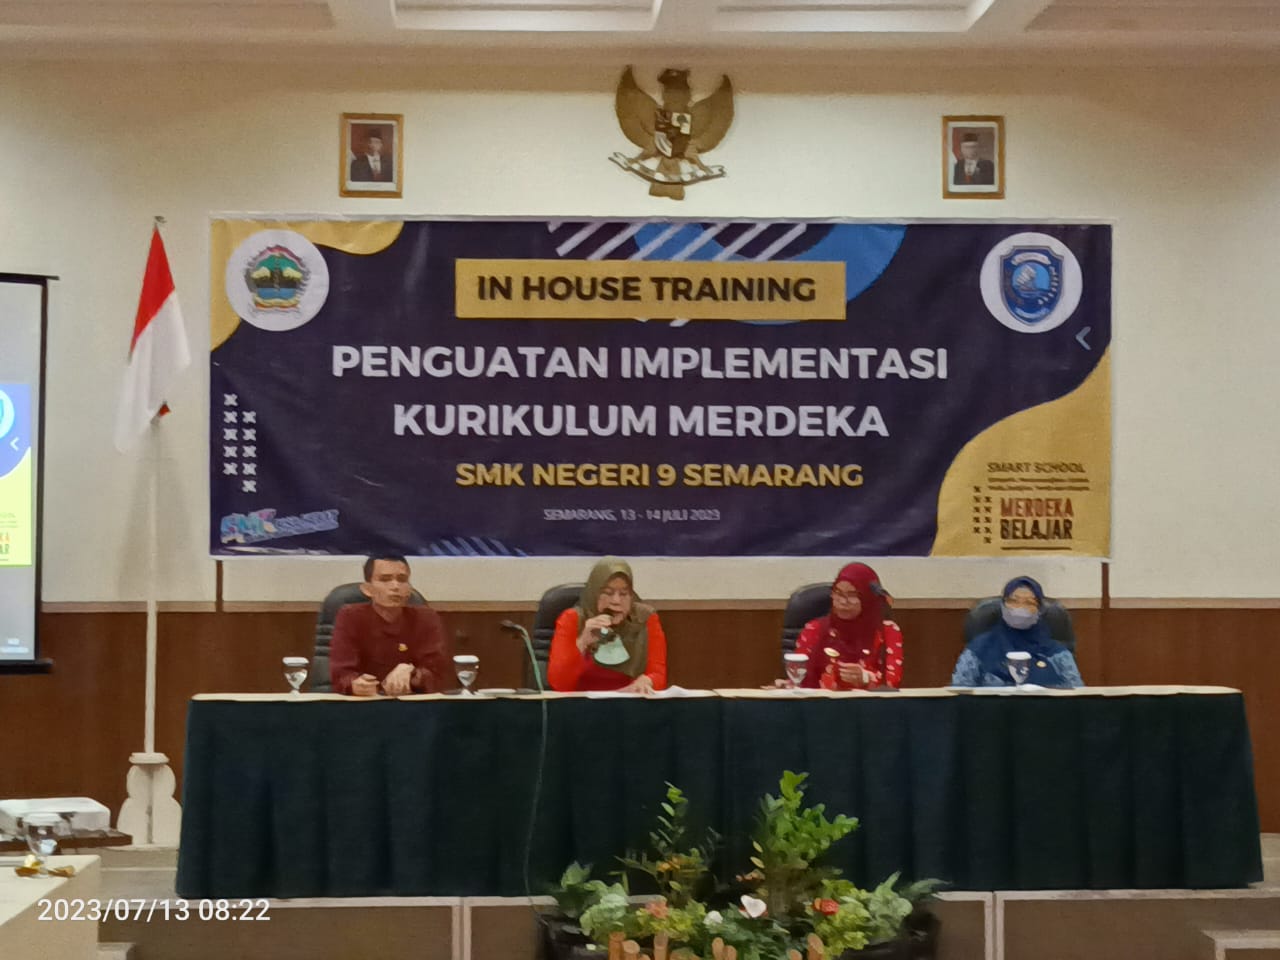 IHT 2023 : Implementasi Kurikulum Merdeka di SMK Negeri 9 Semarang